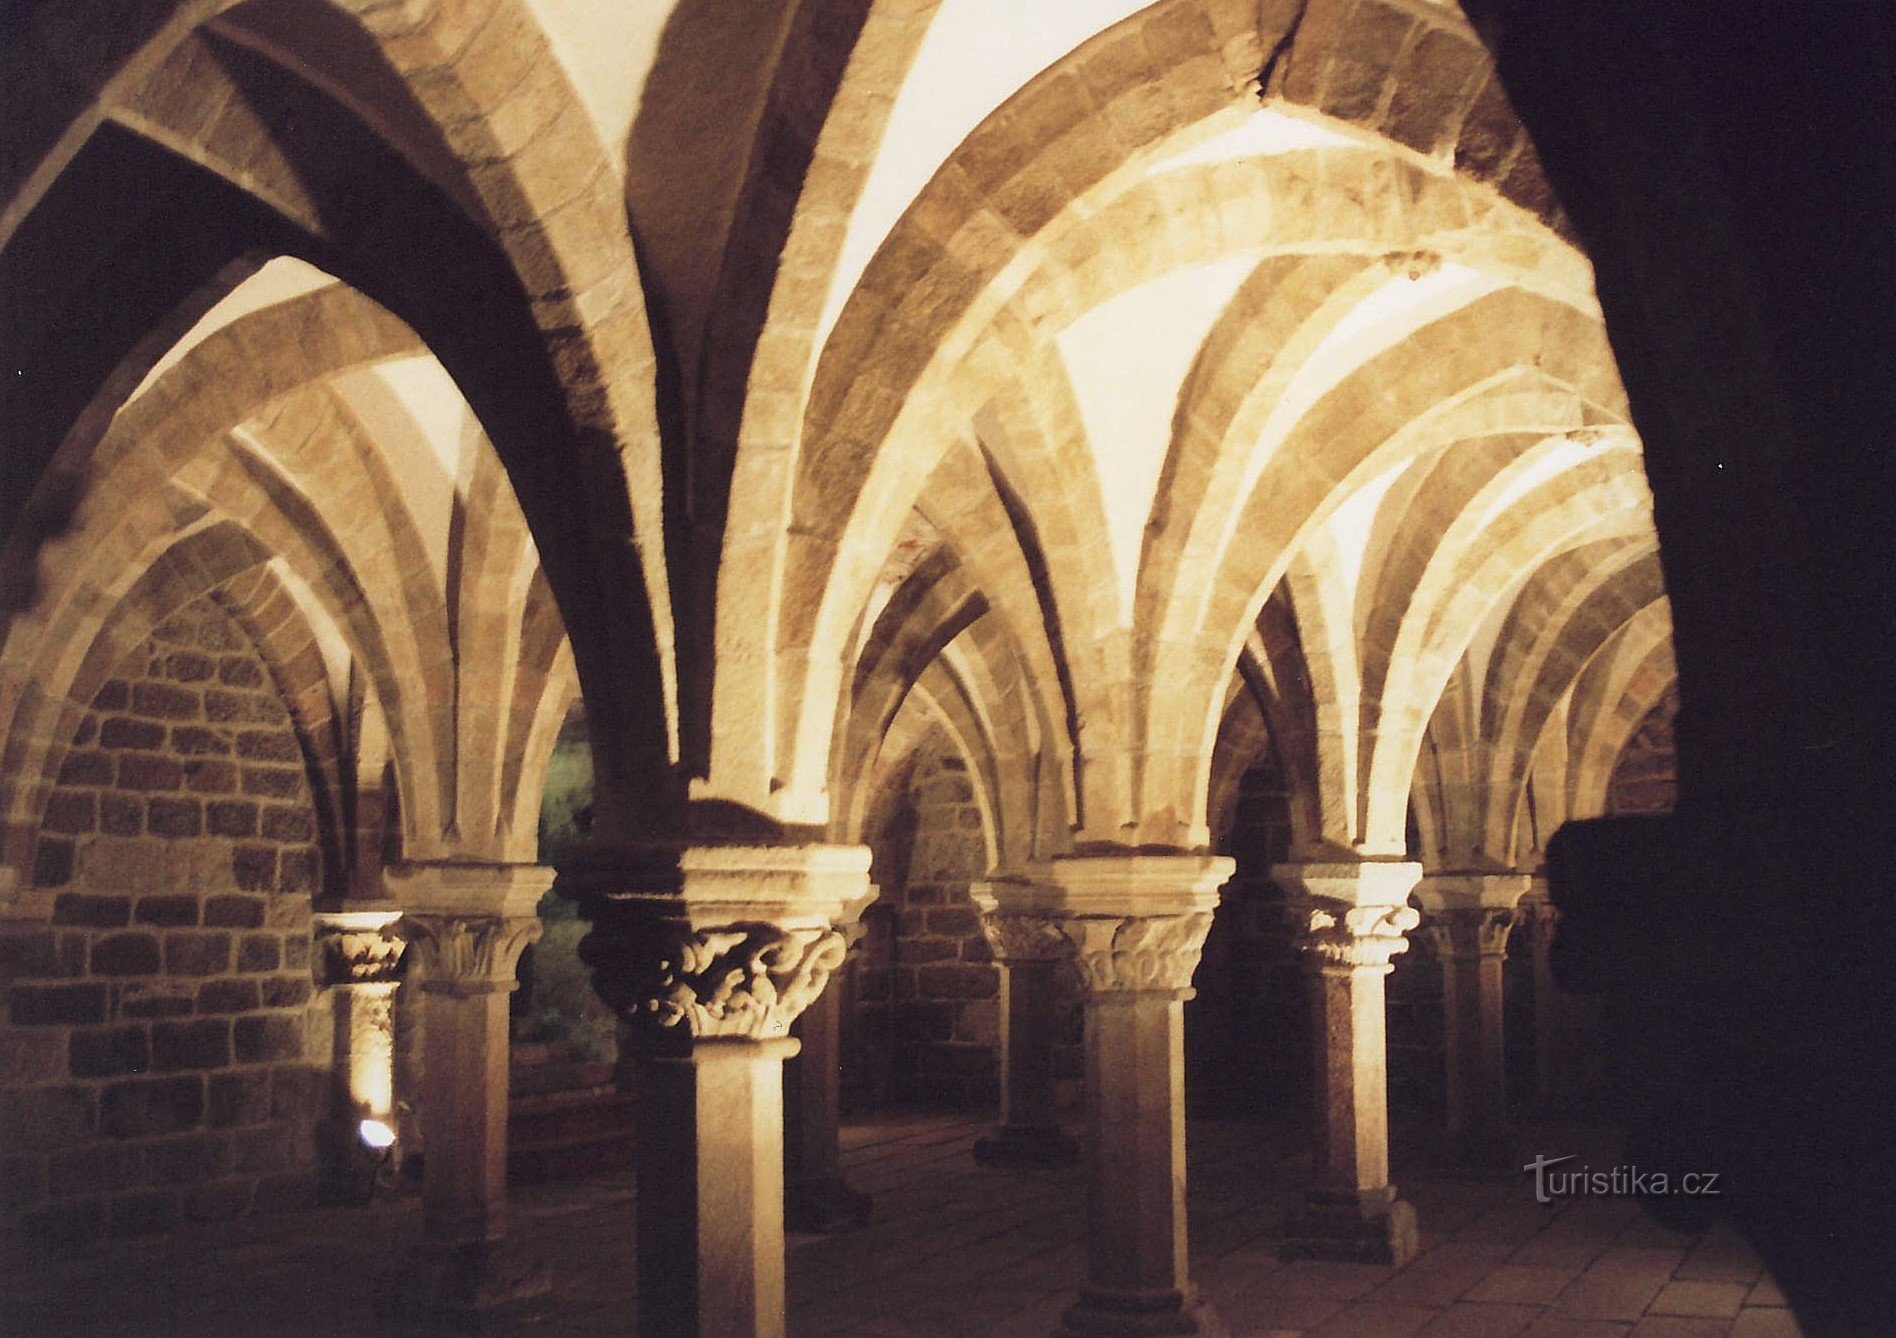 Třebíč – Cripta romanica